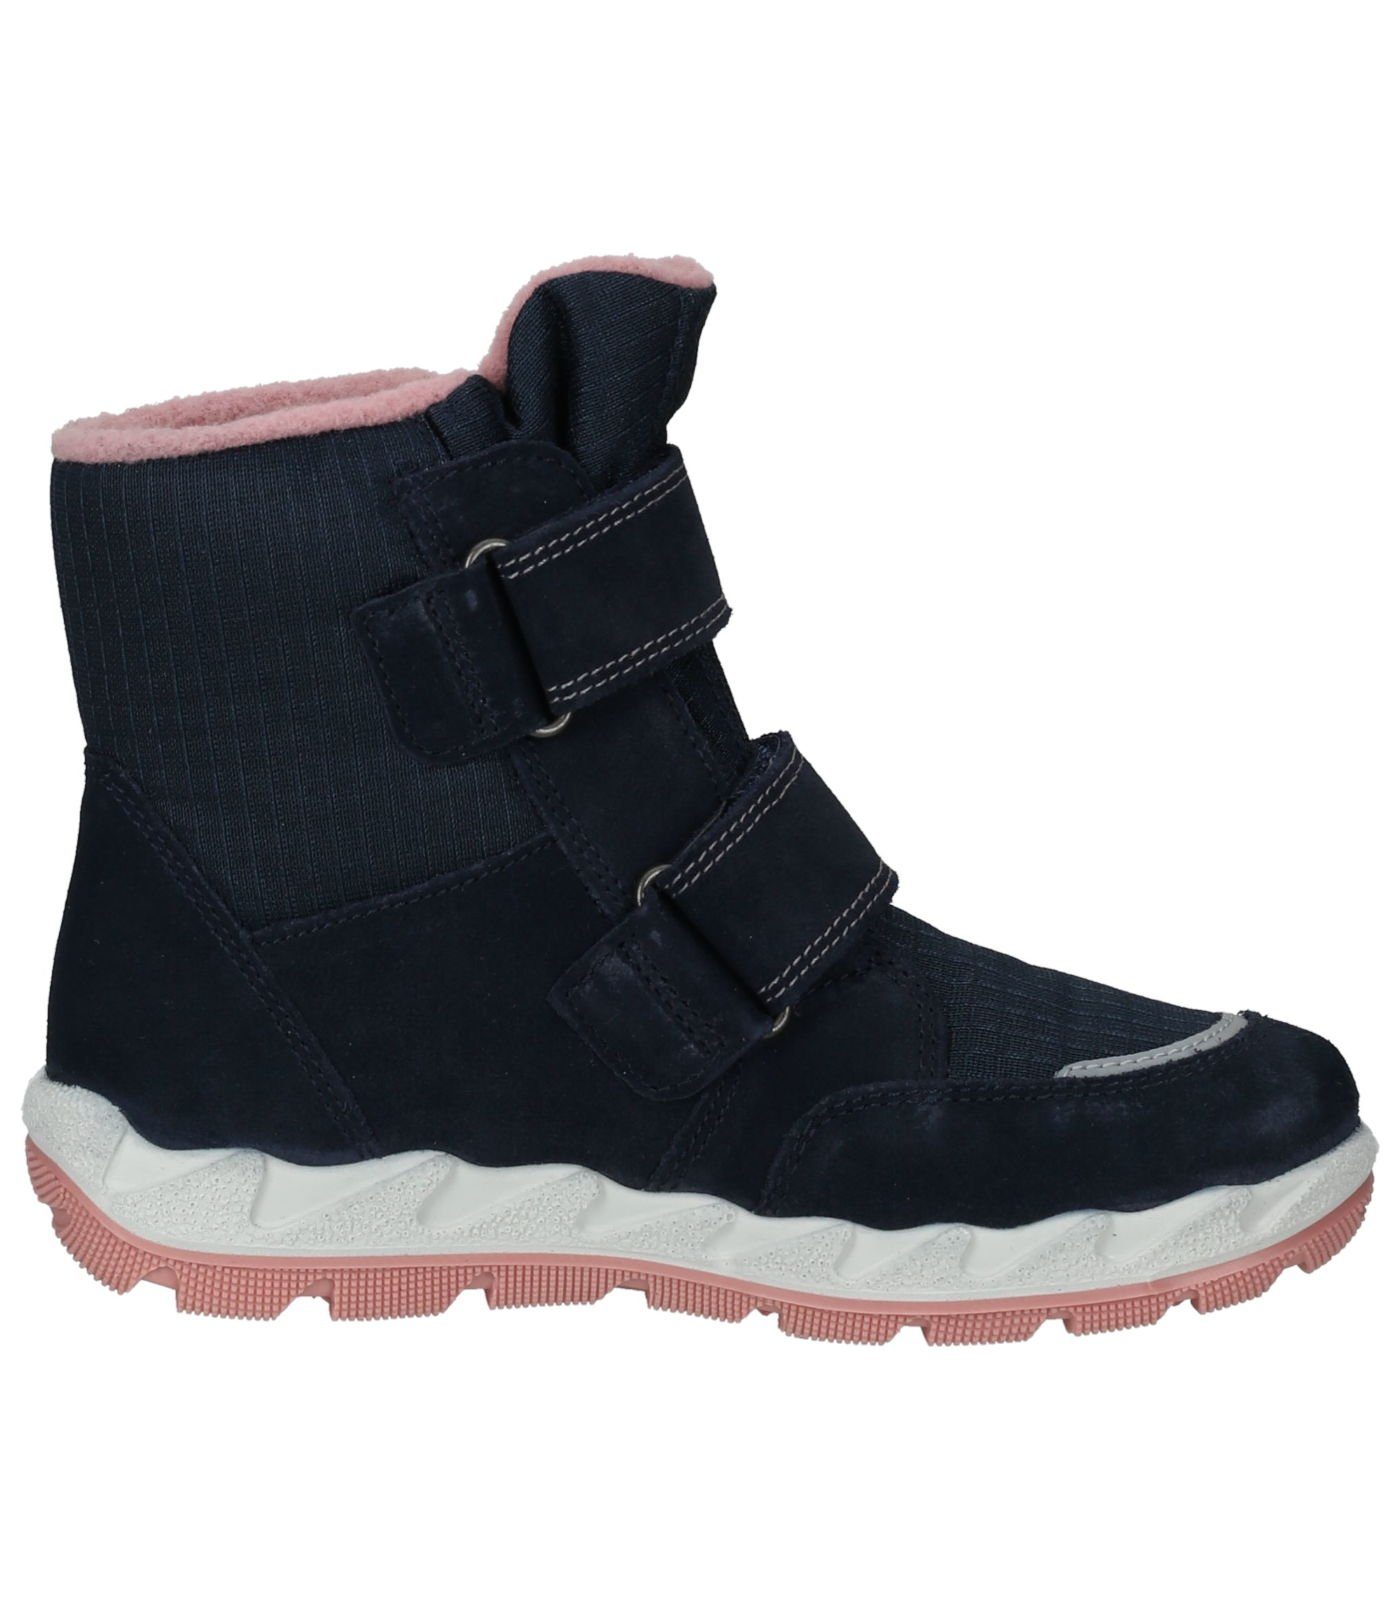 Veloursleder/Textil Superfit Stiefel (20401898) Winterstiefel BLAU/ROSA